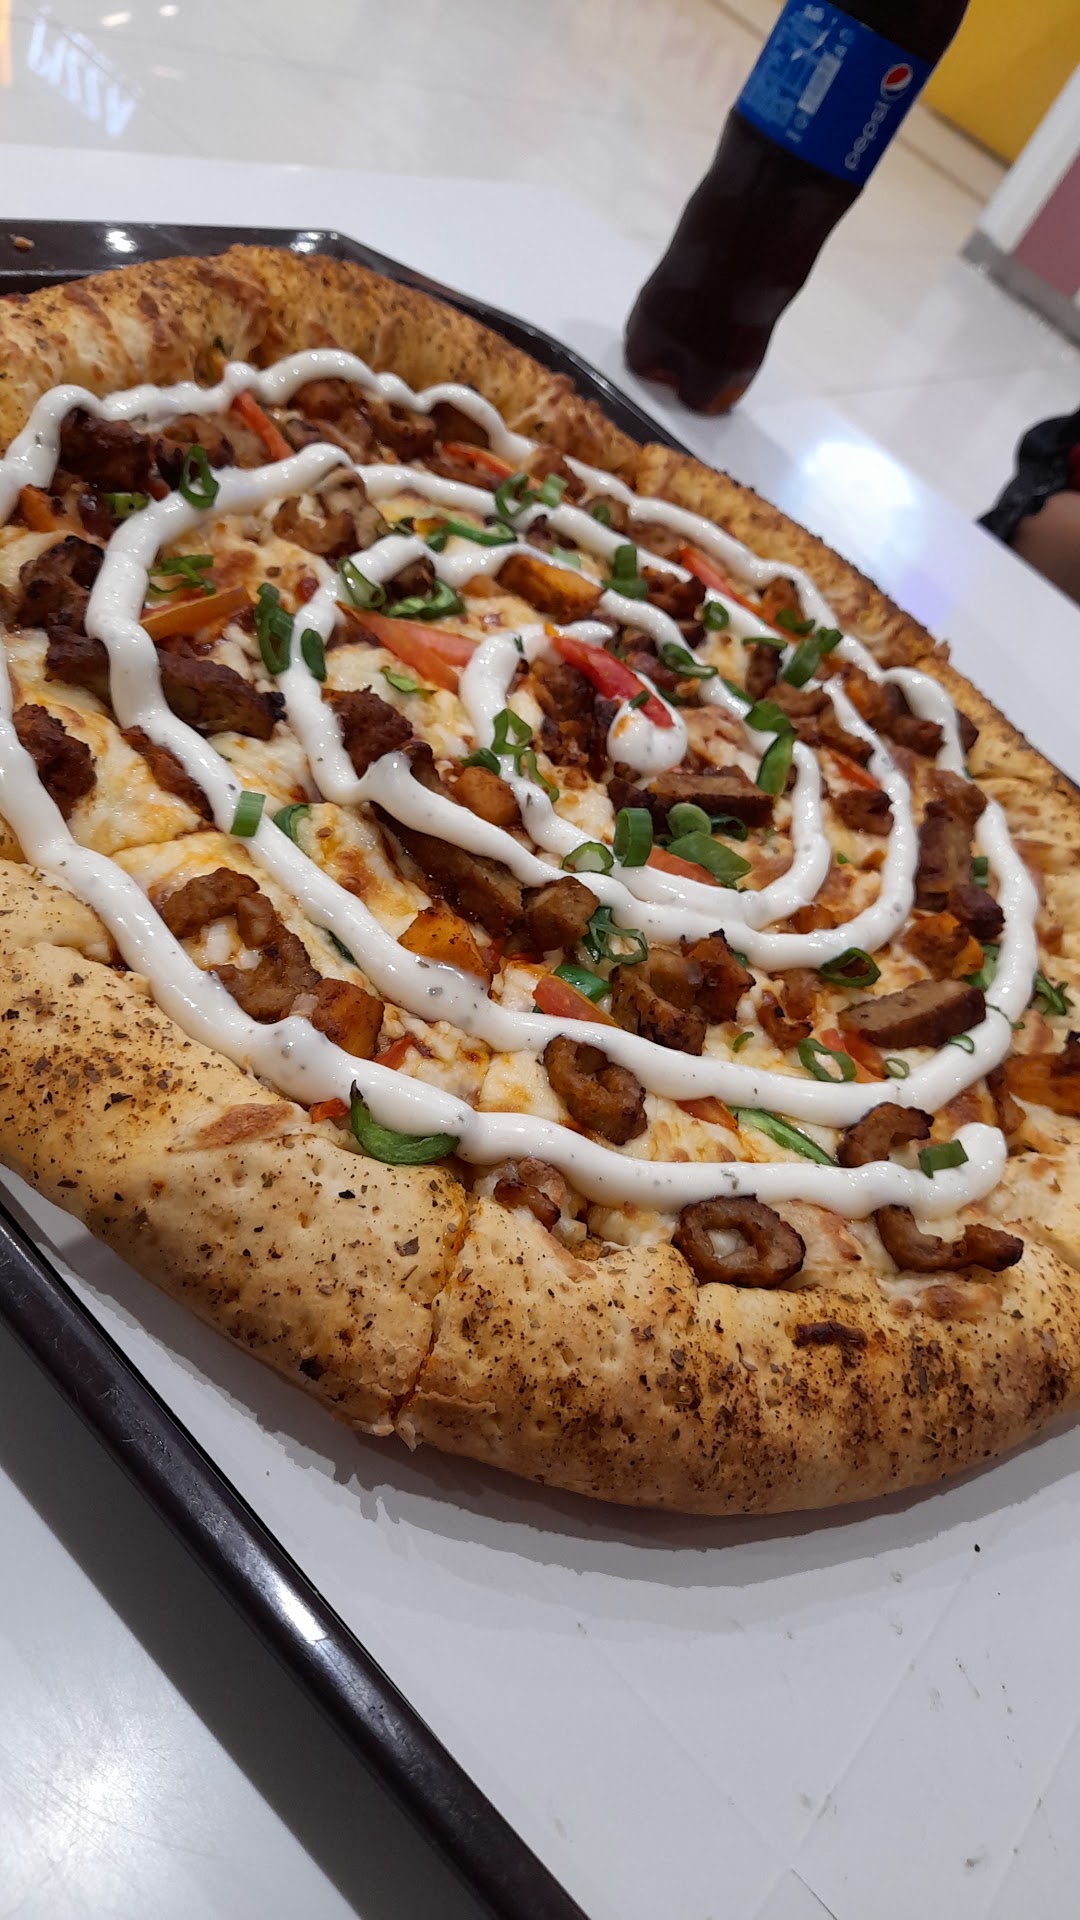 Broadway Pizza Lyallpur Galleria Faisalabad